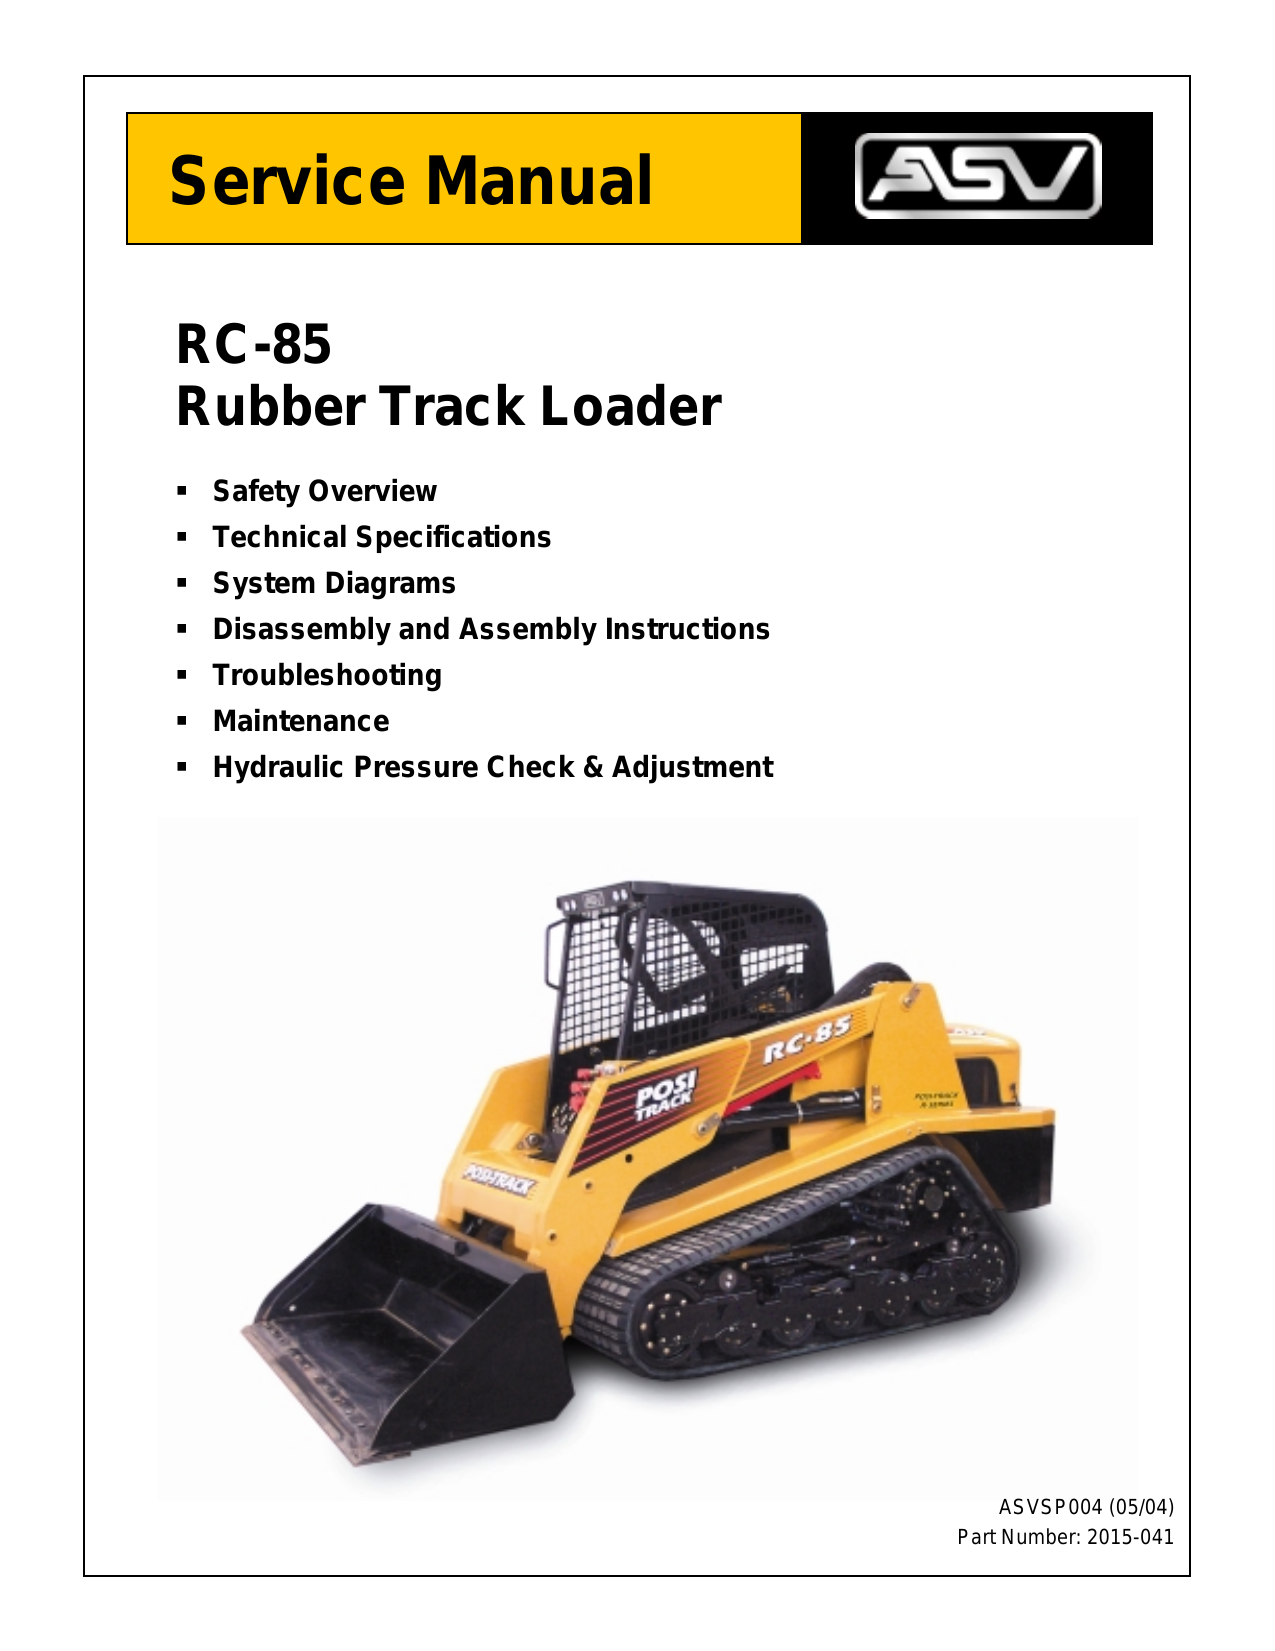 ASV RC85 compact track loader parts operators manual Preview image 2